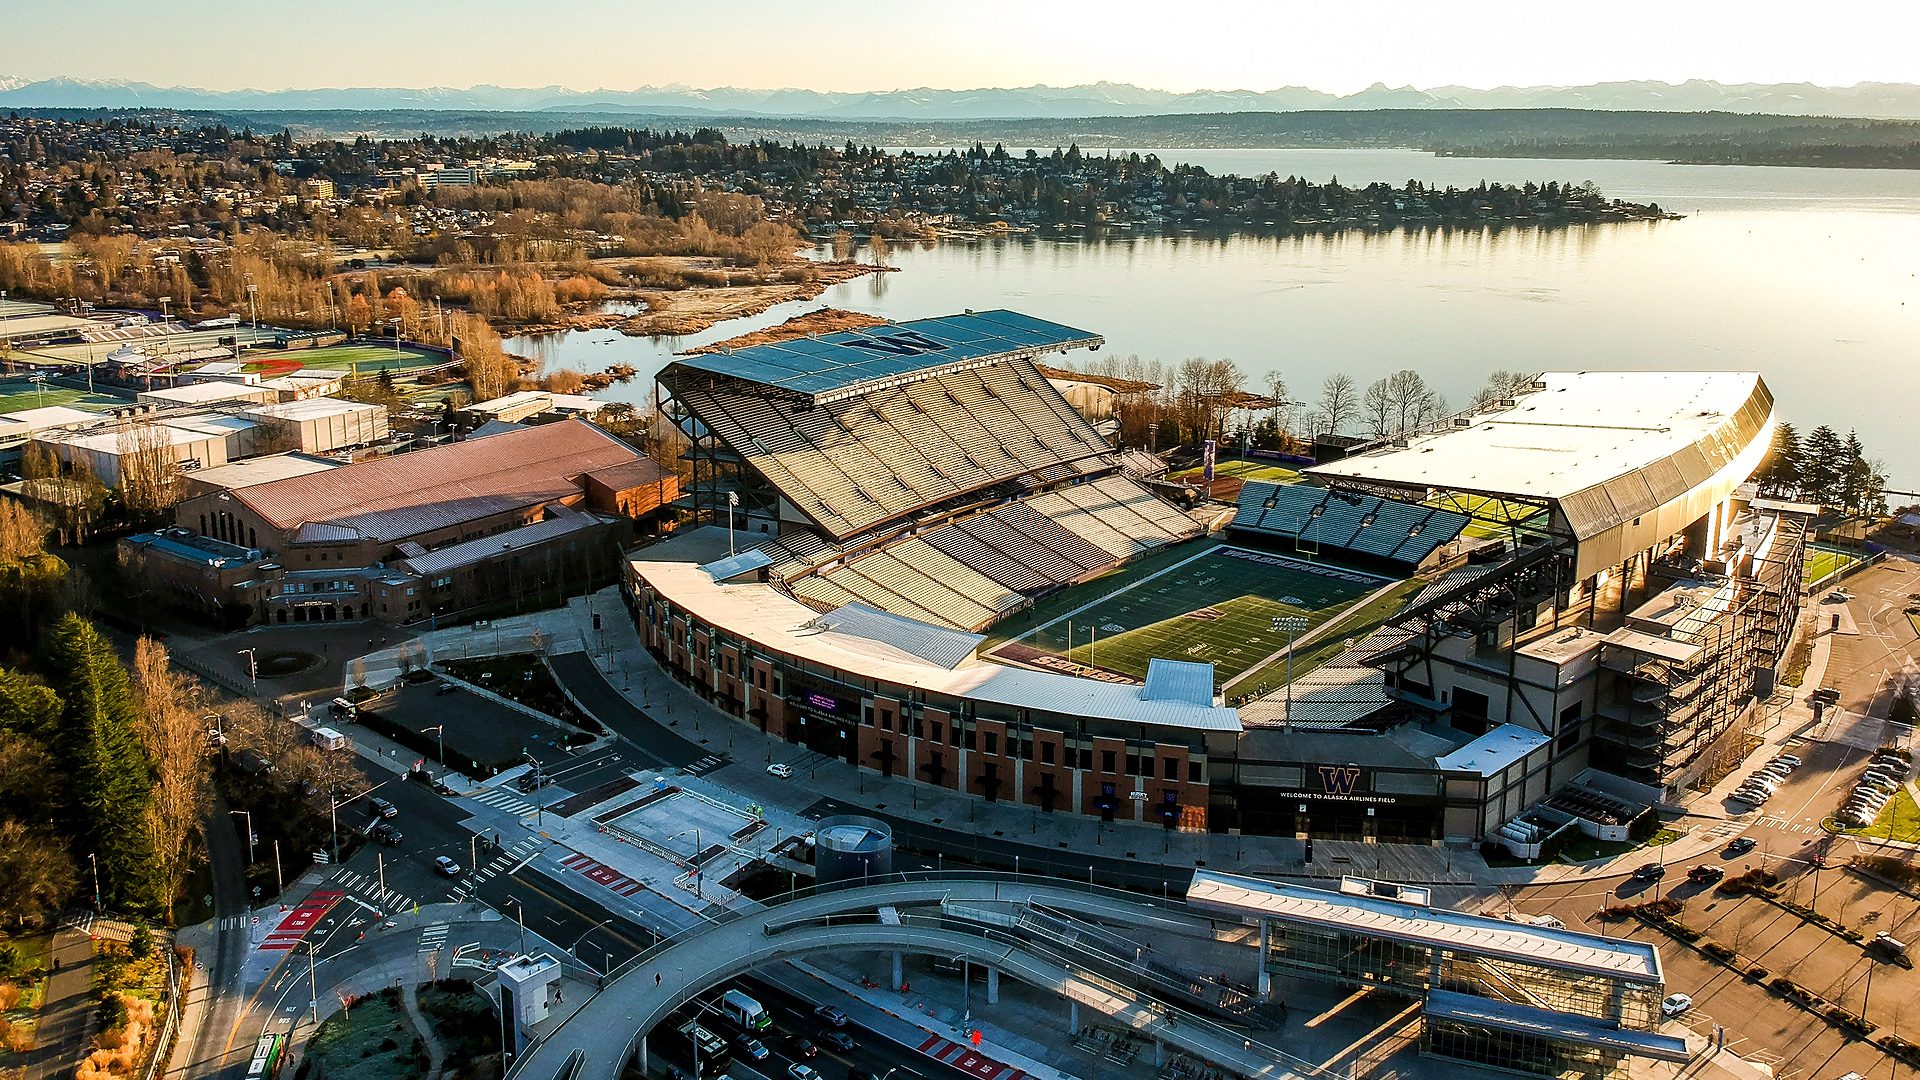 Home Field University of Washington’s Husky Stadium